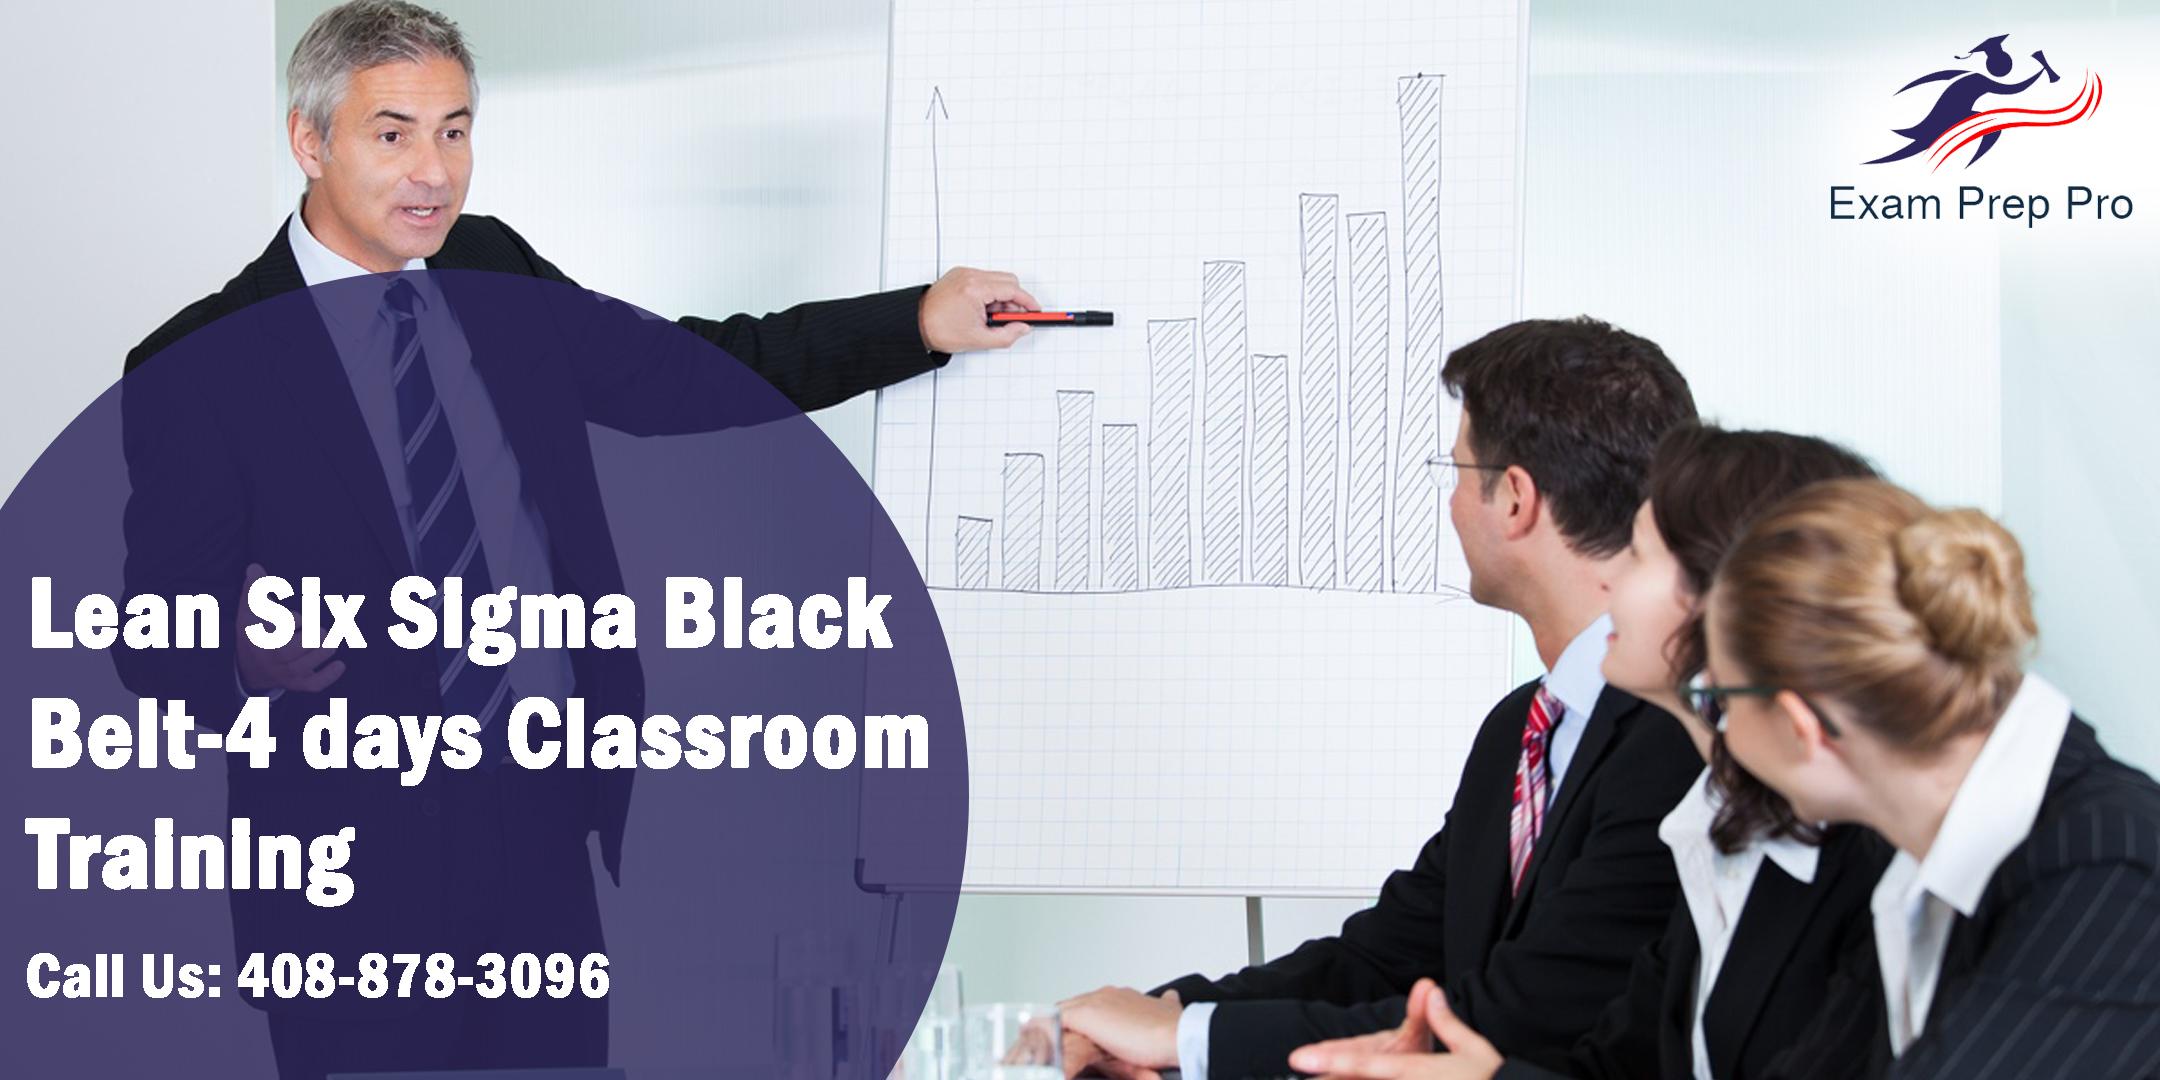 Lean Six Sigma Black Belt-4 days Classroom Training in Denver